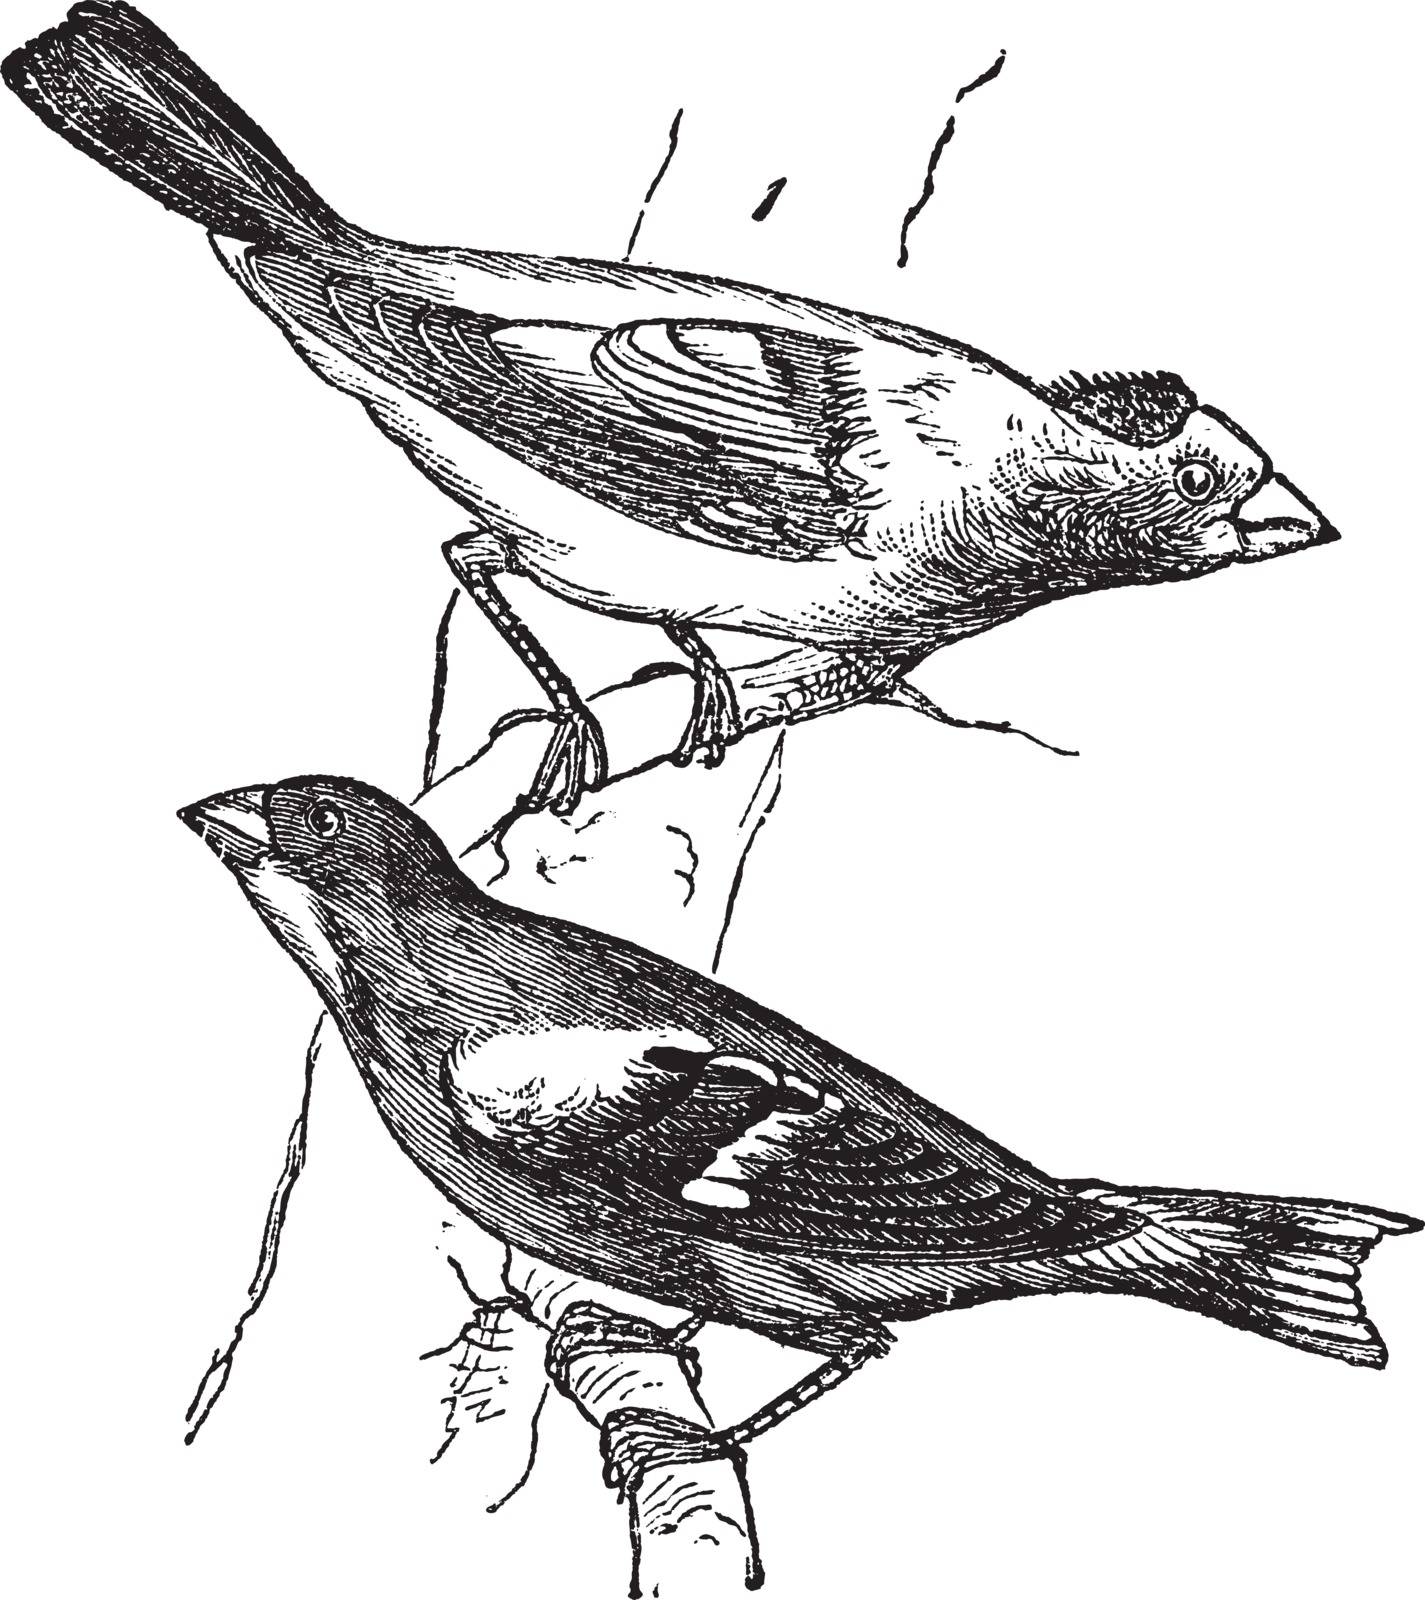 Evening grosbeak (Hesperiphona vespertina) or Finch 1.Male 2. Fe by Morphart